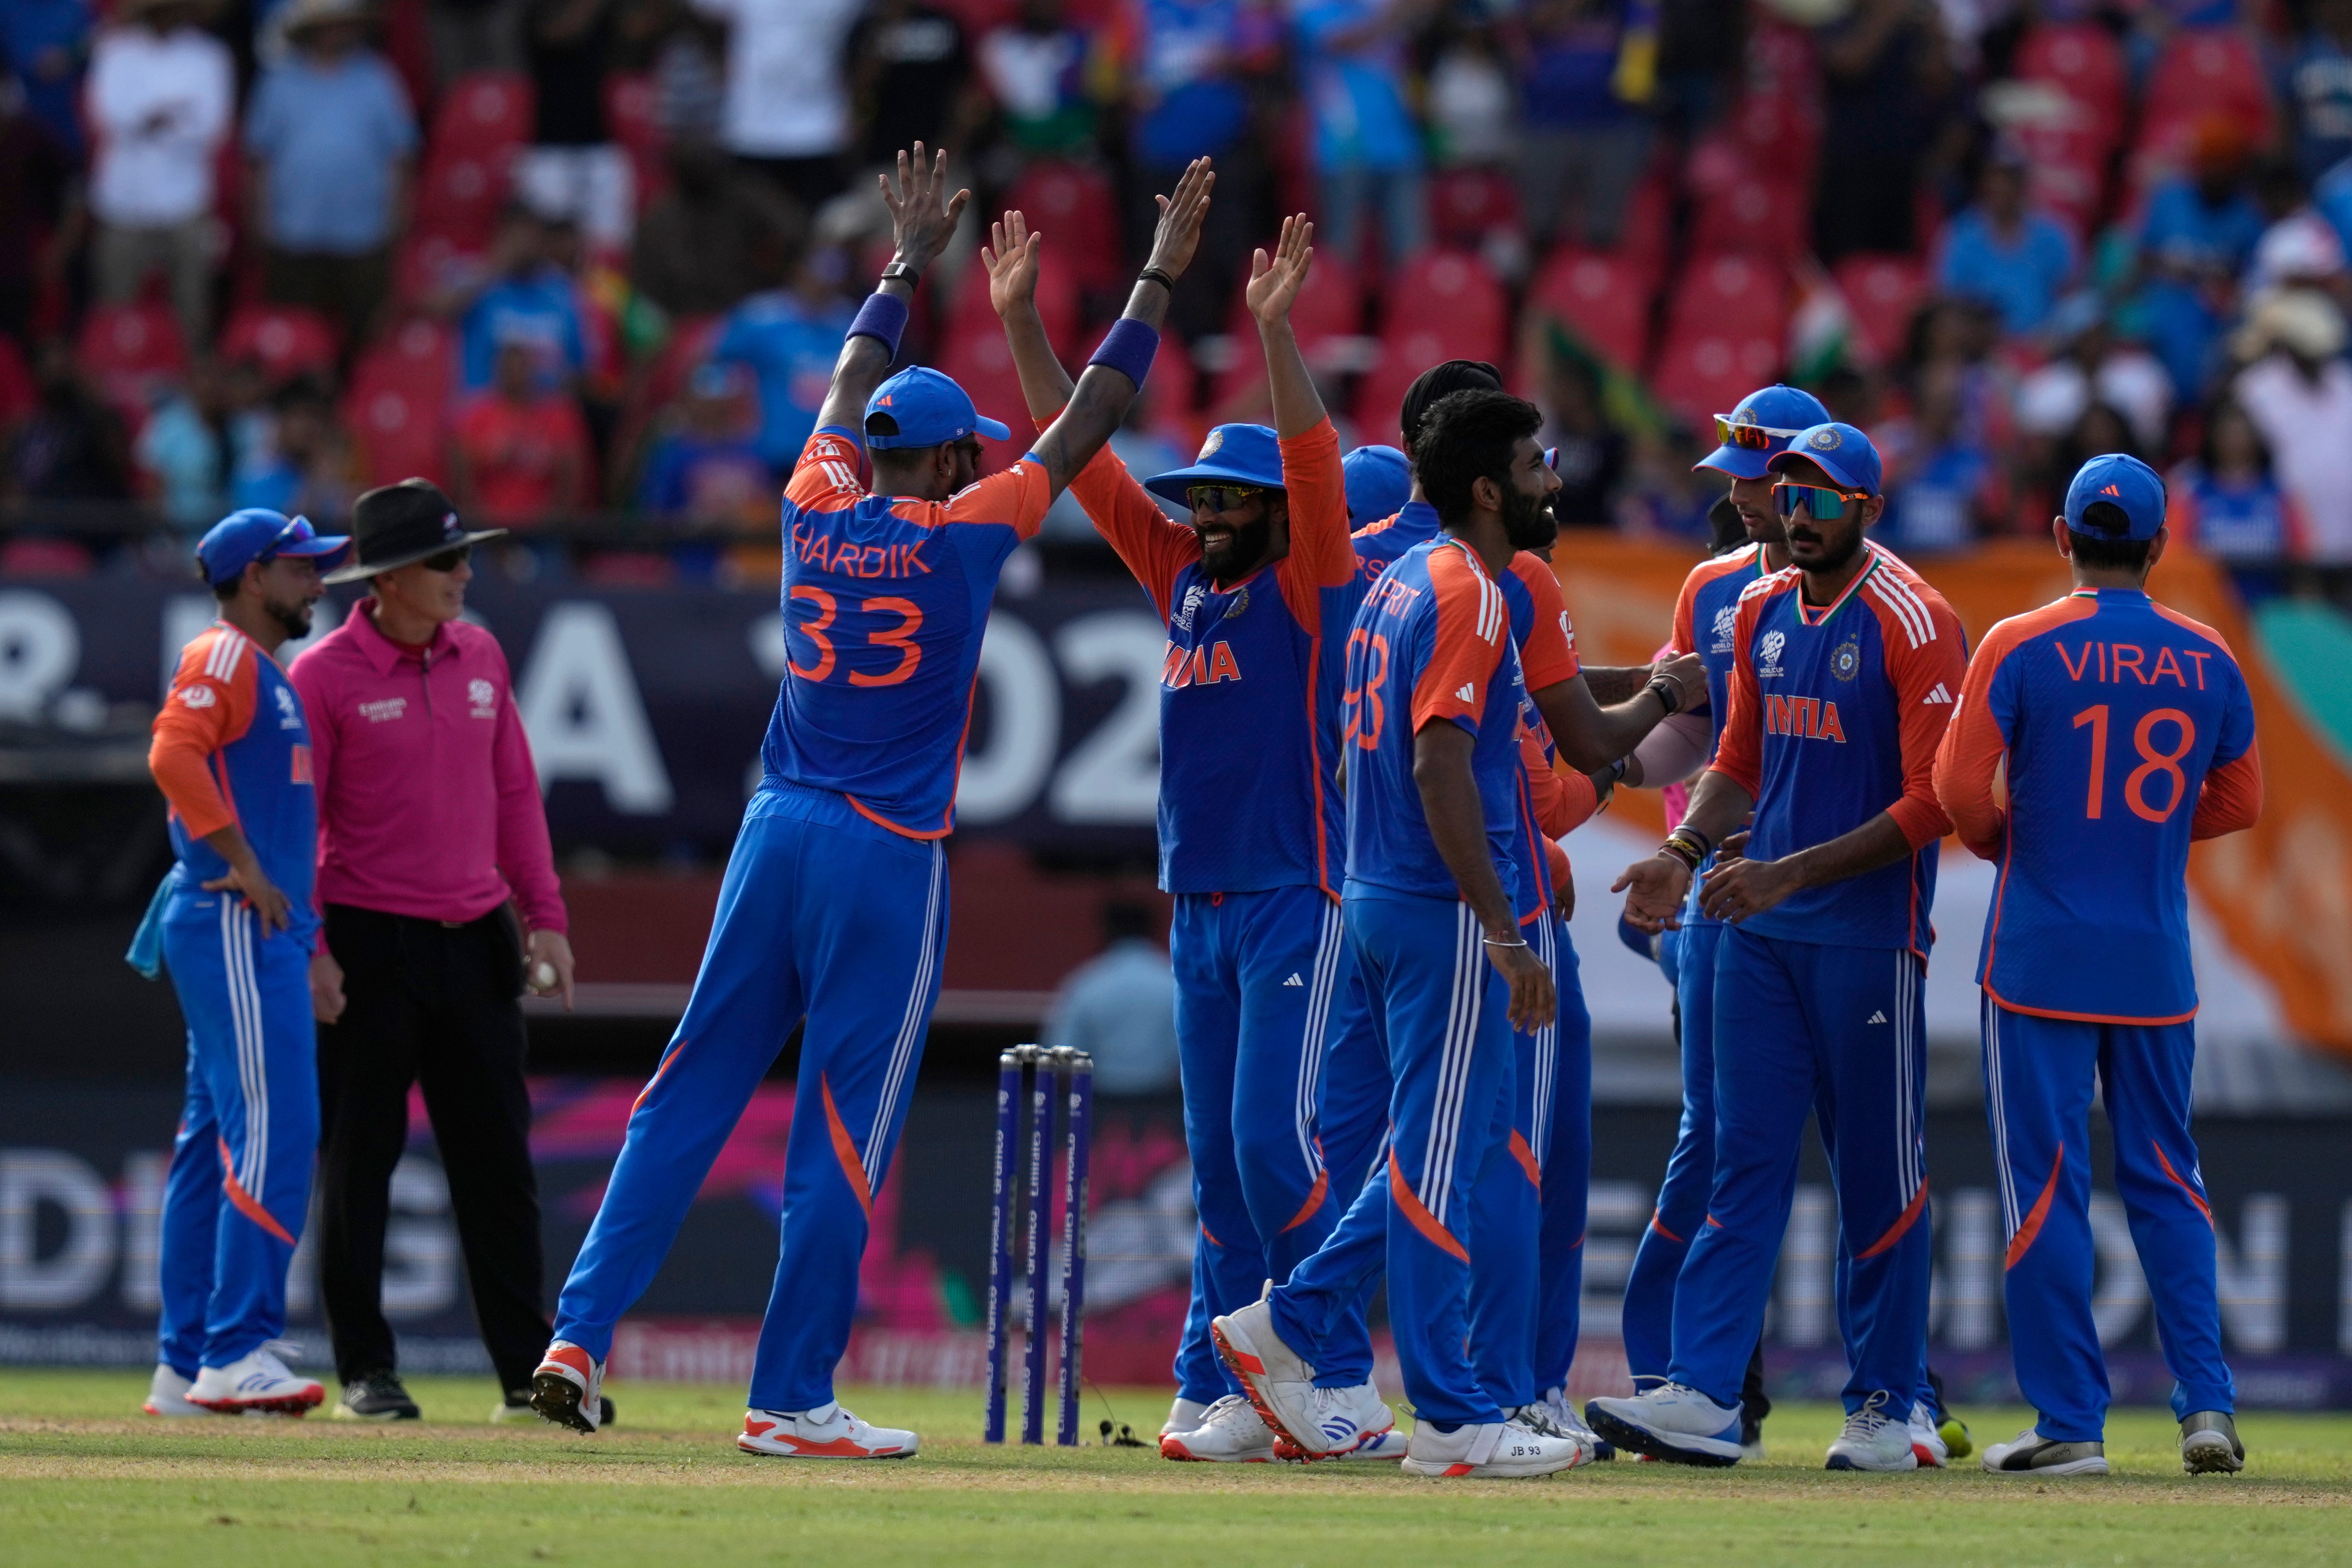 India are through to the final (Ramon Espinosa/AP)